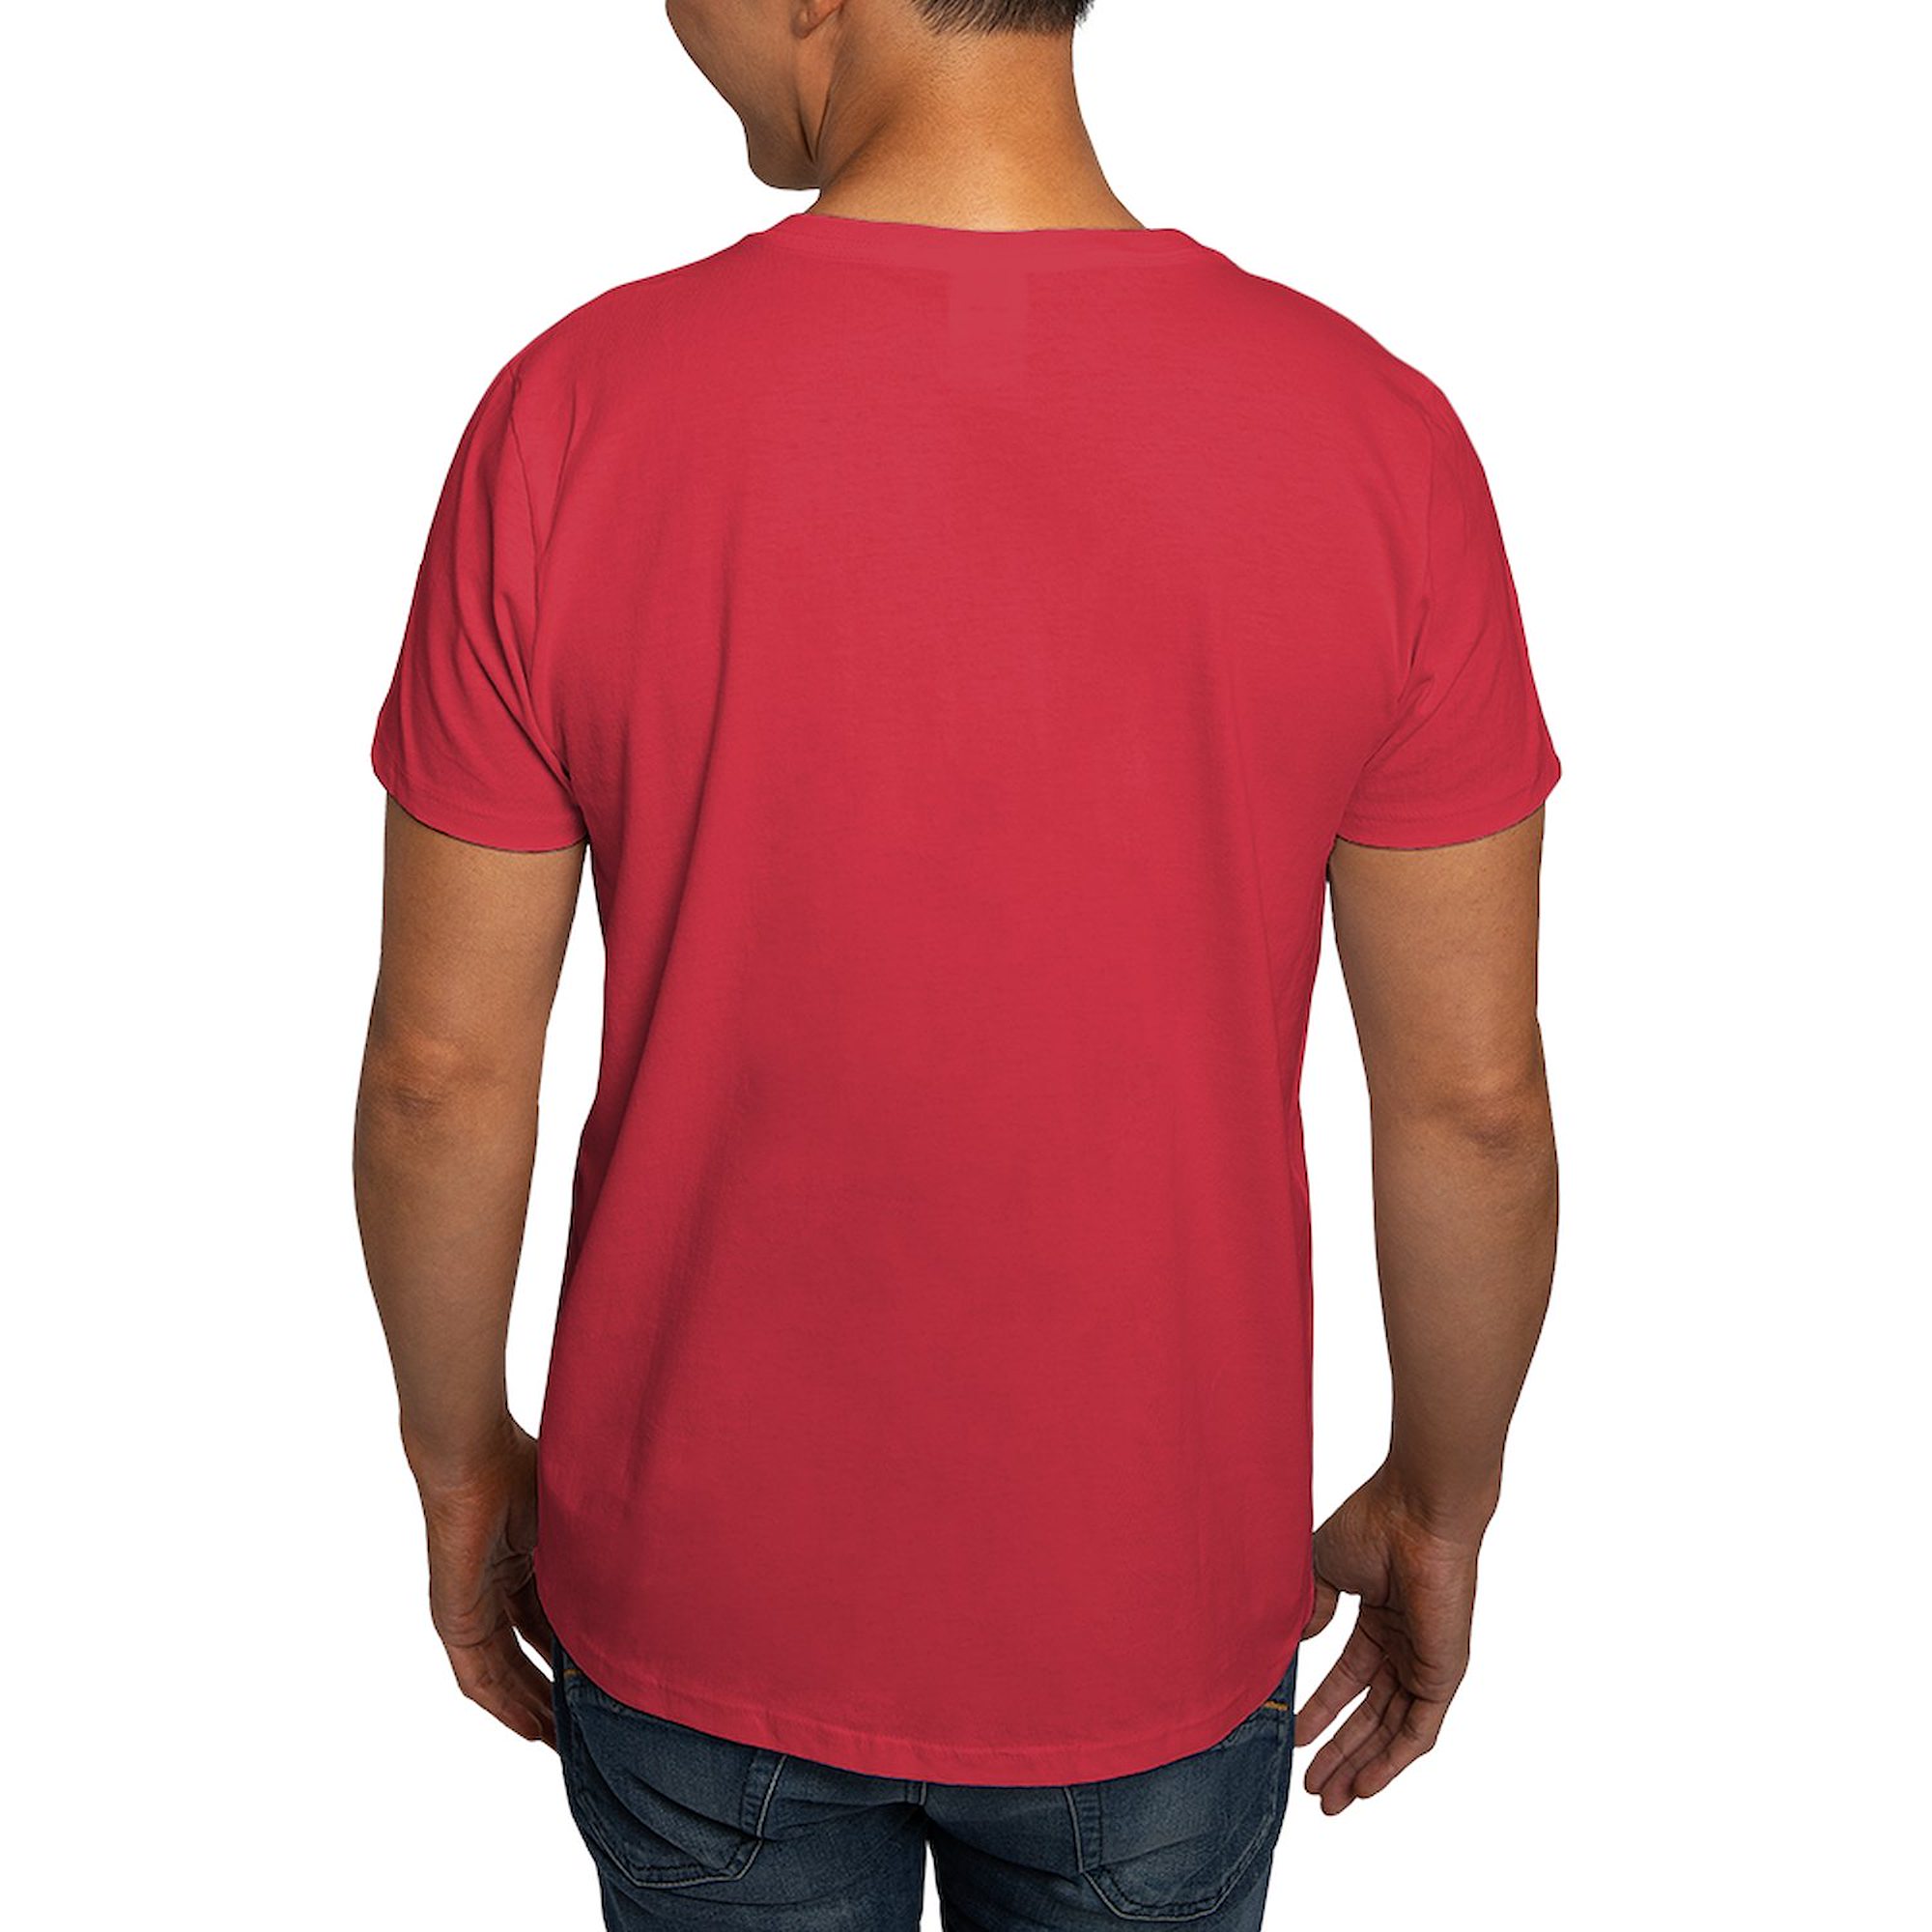 CafePress - Cinco De Mayo Funny Tshirts Gifts Shirts T Shirt - 100% Cotton T-Shirt - image 2 of 4